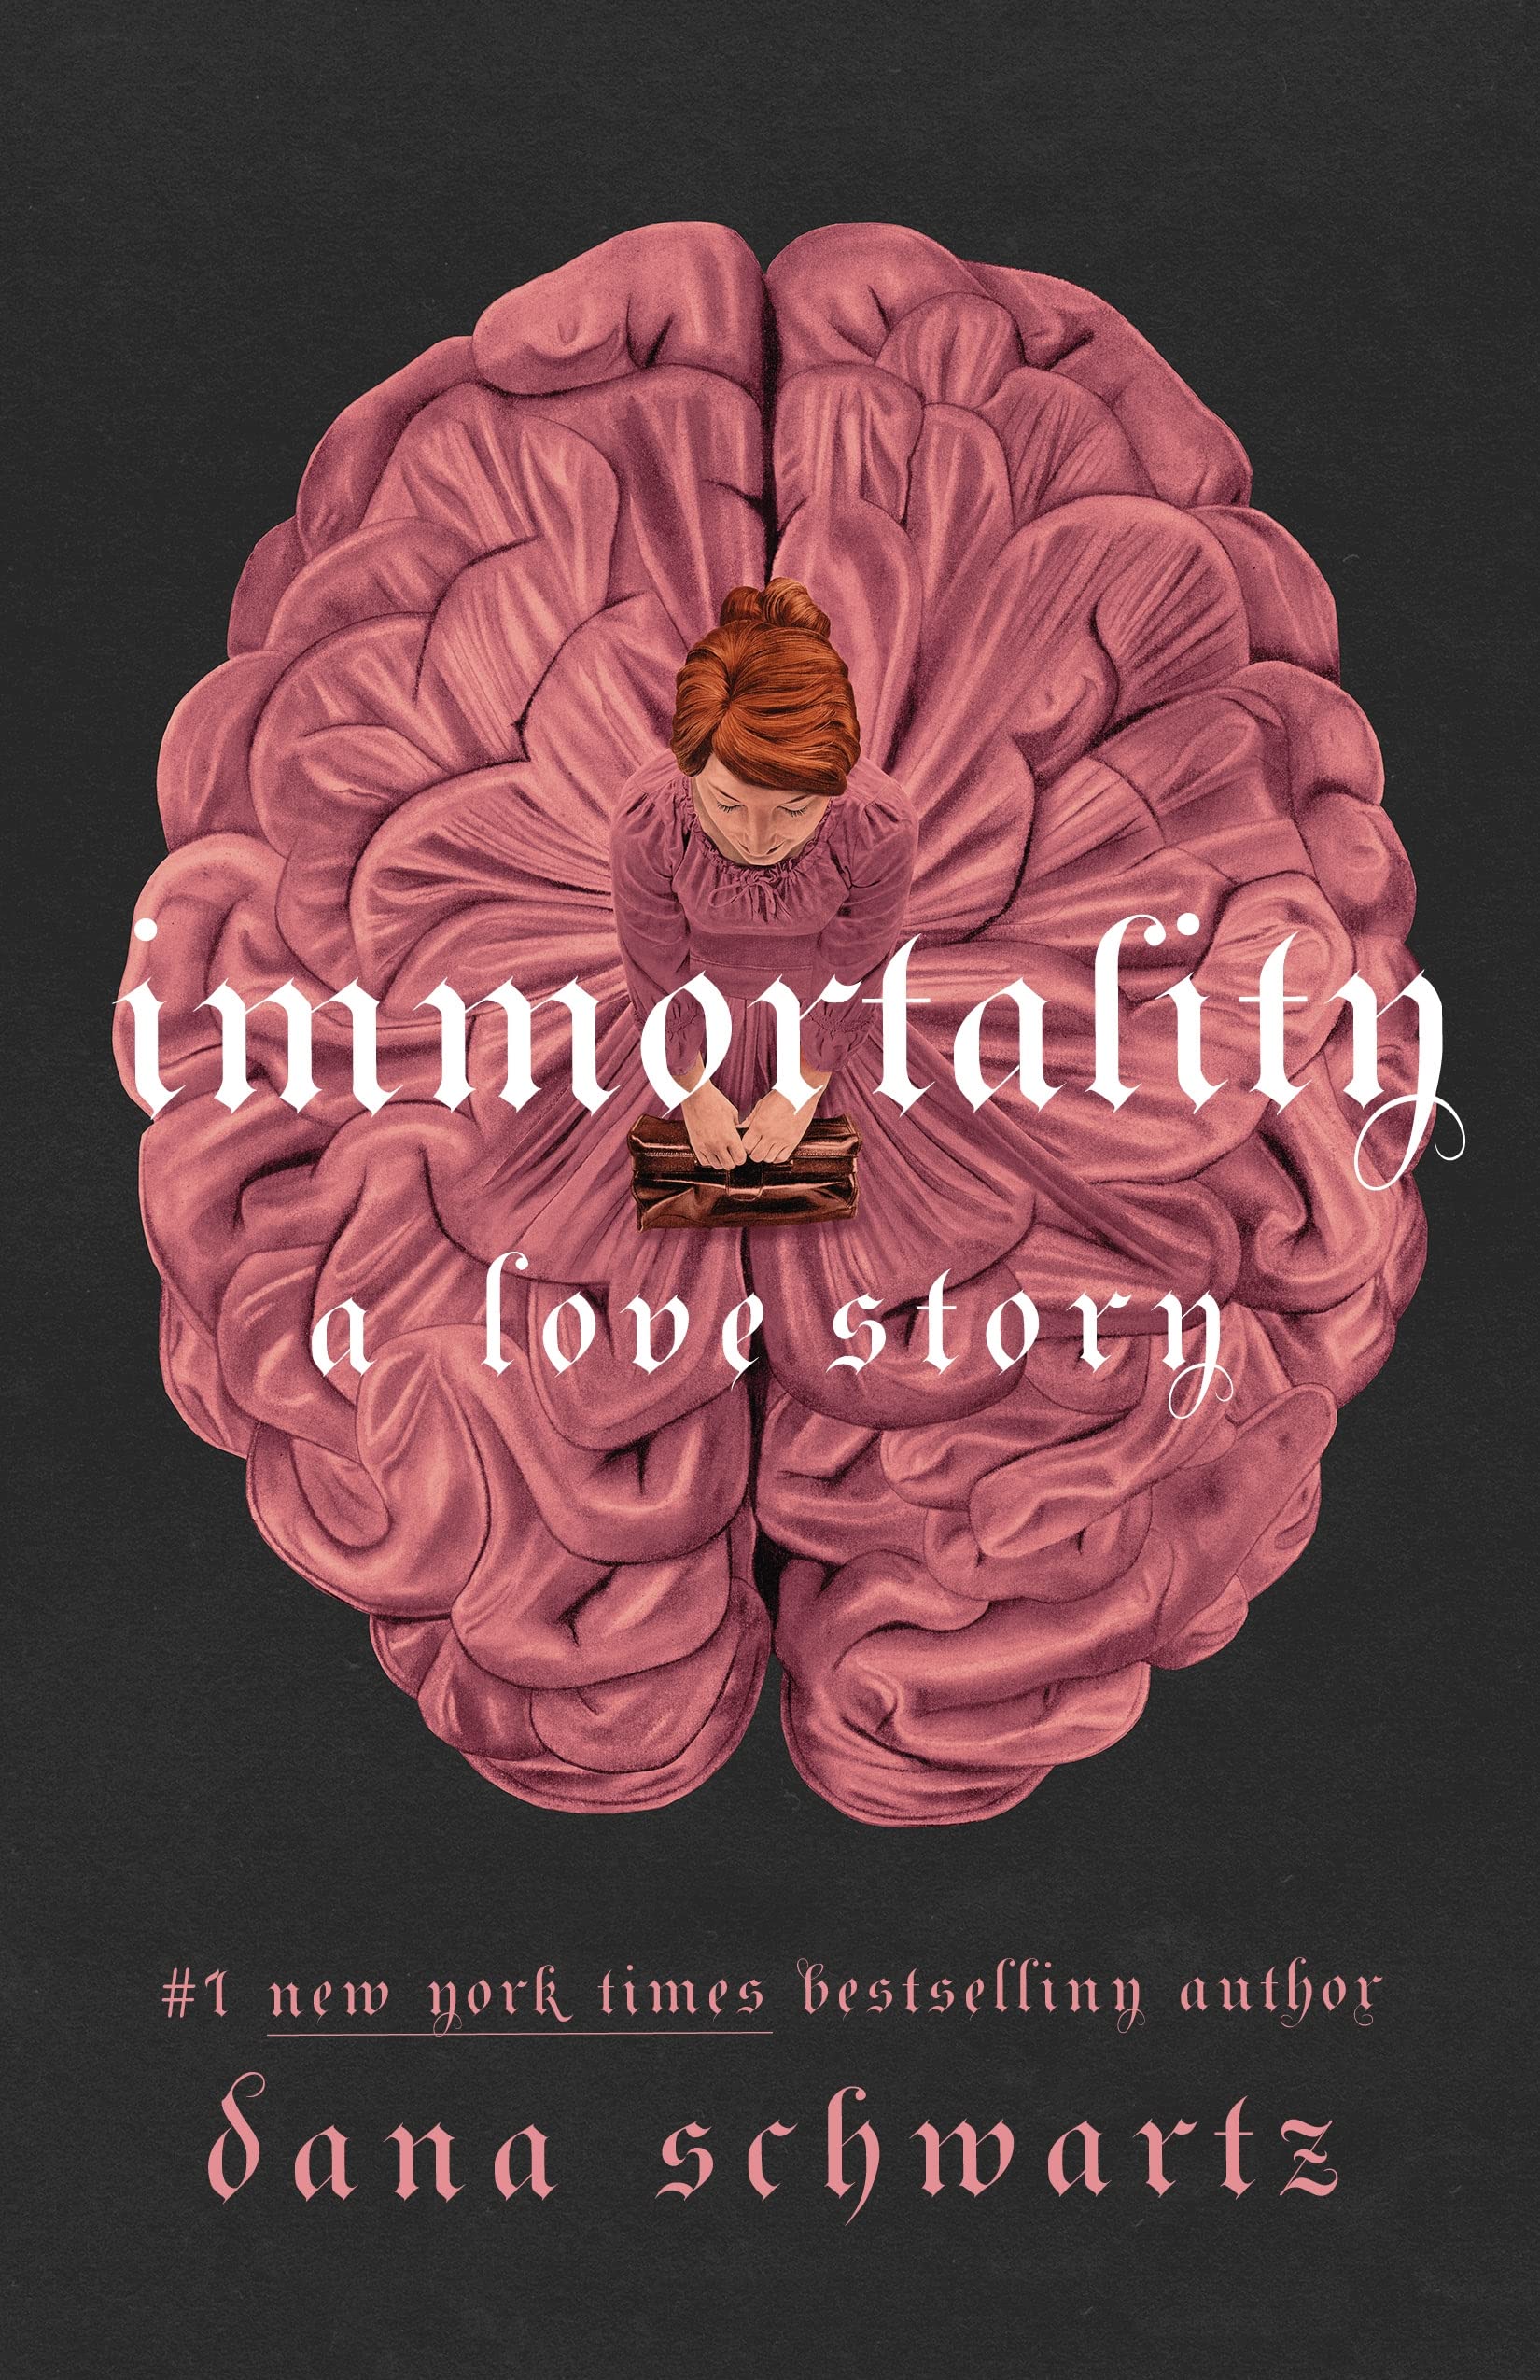 Author Event with Dana Schwartz/Immortality